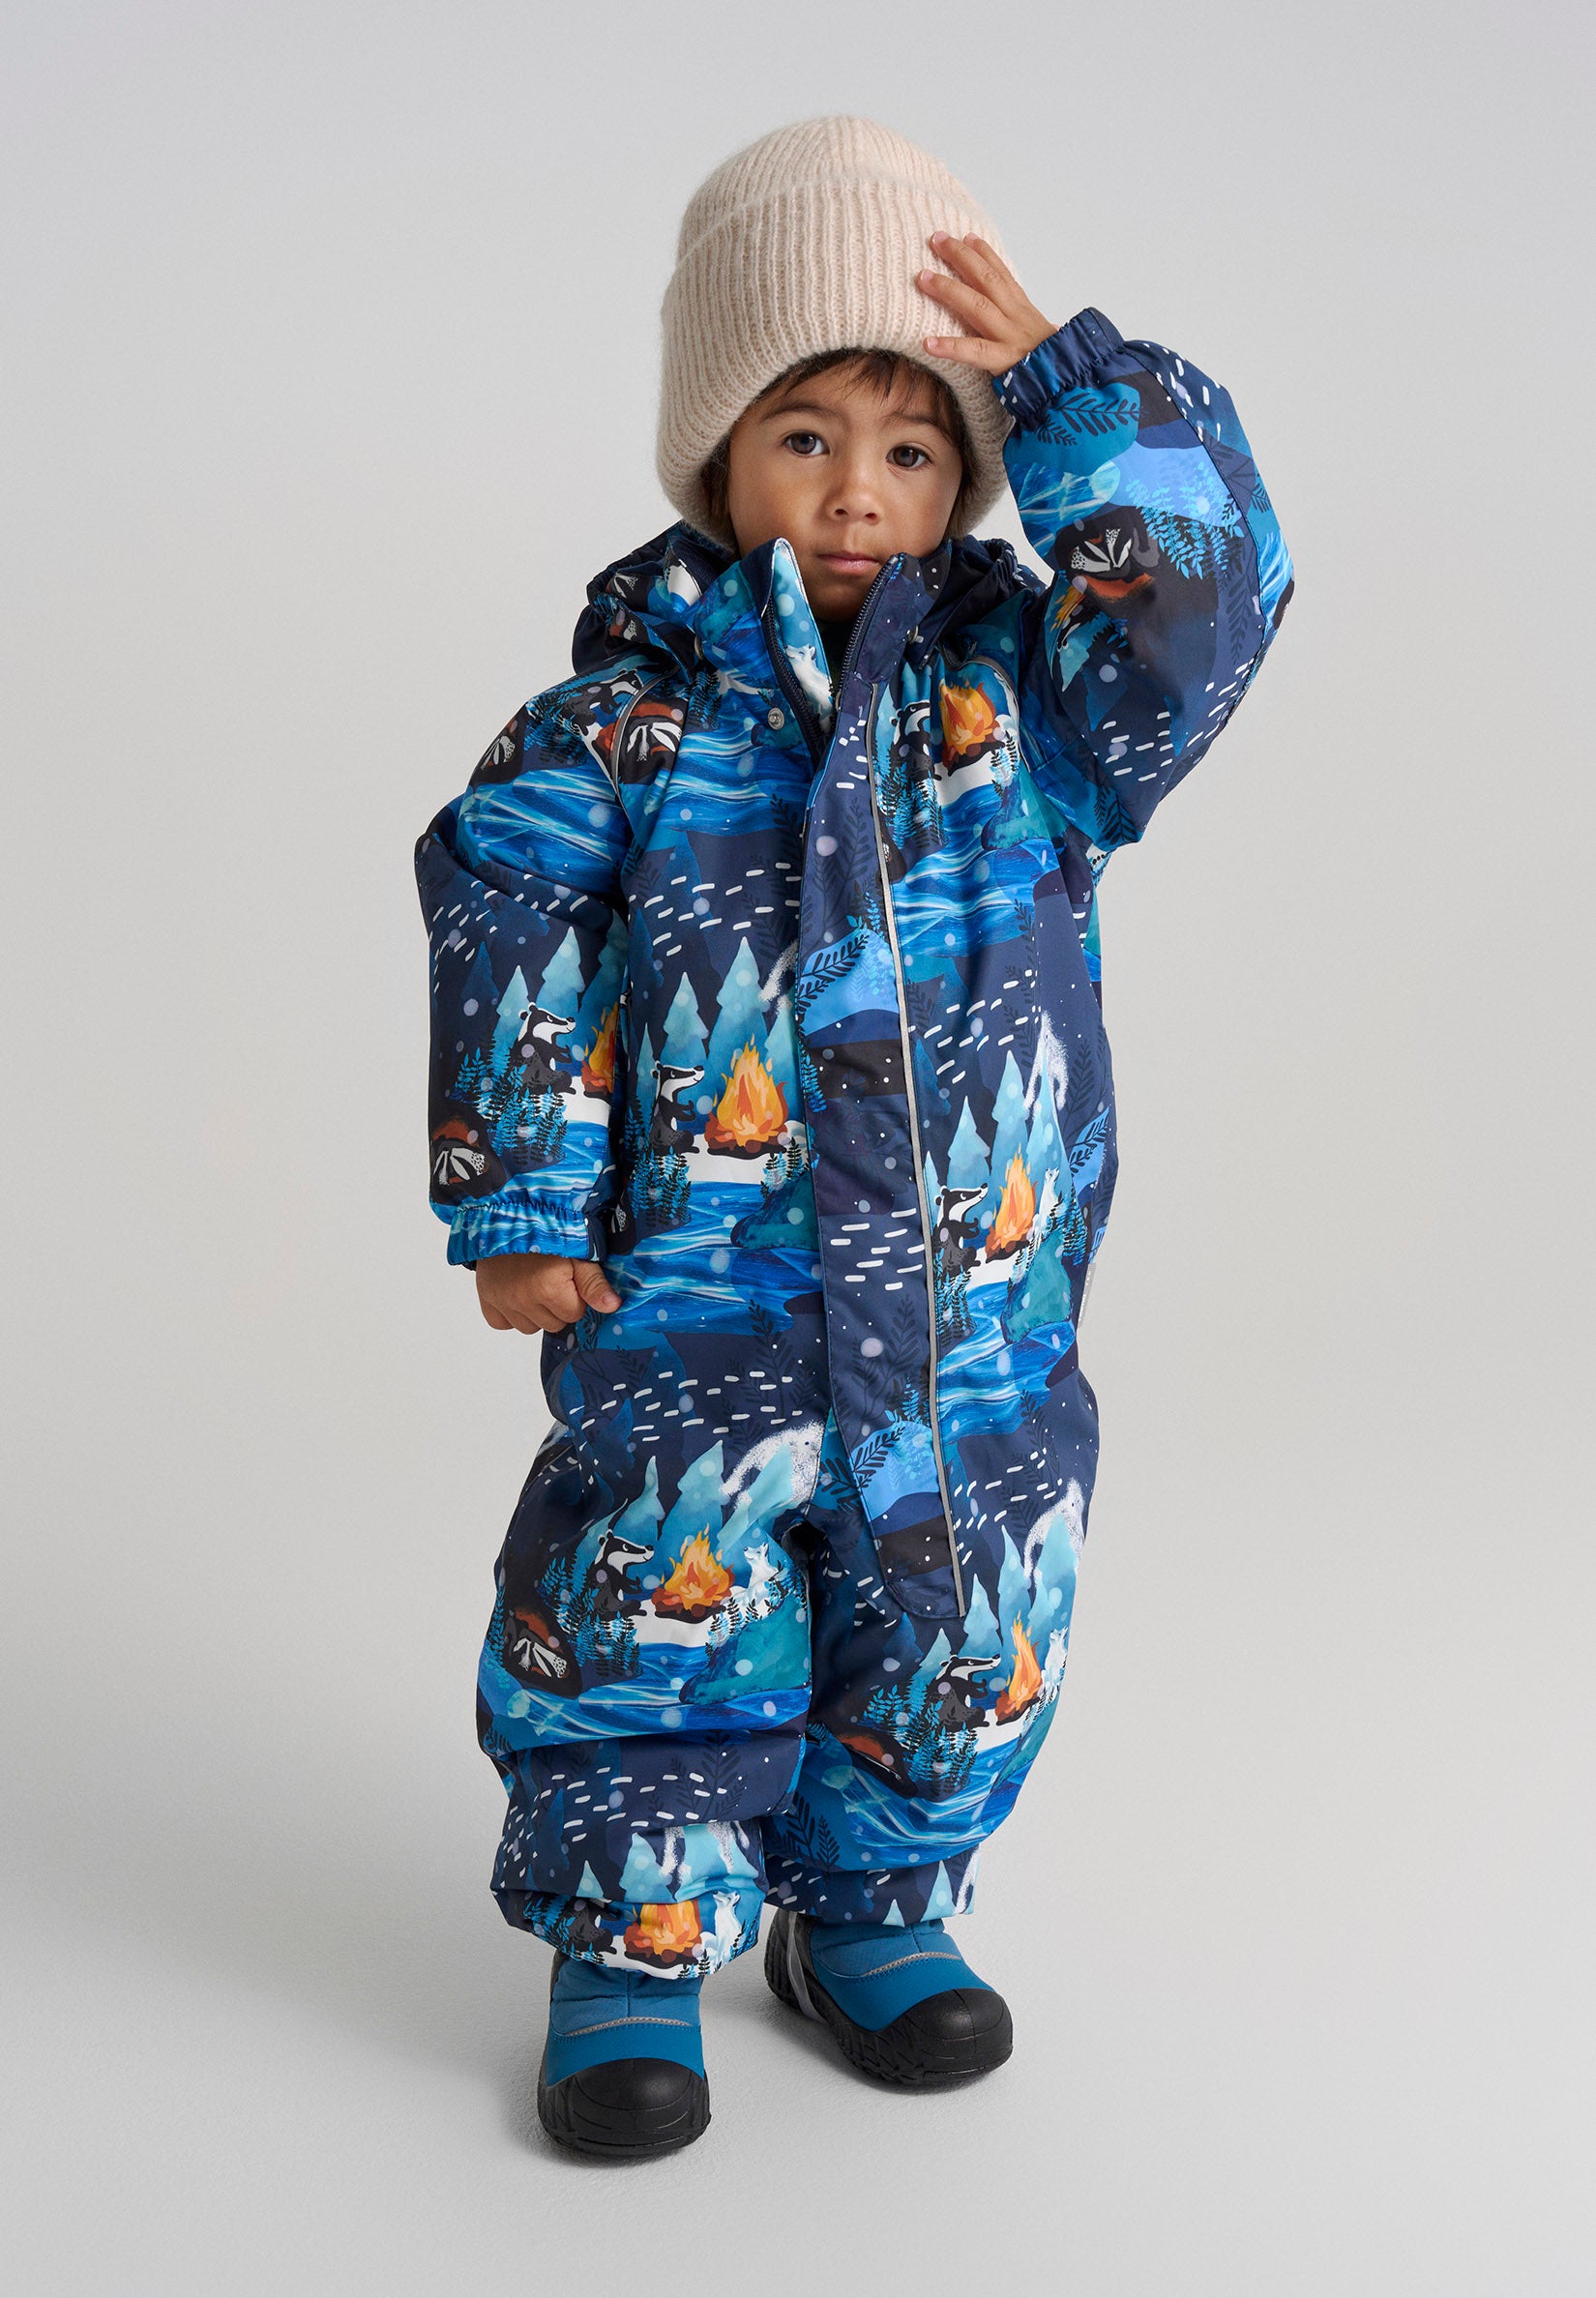 Children's Snowsuits for Warm & Cozy Outdoor Fun - Reima US